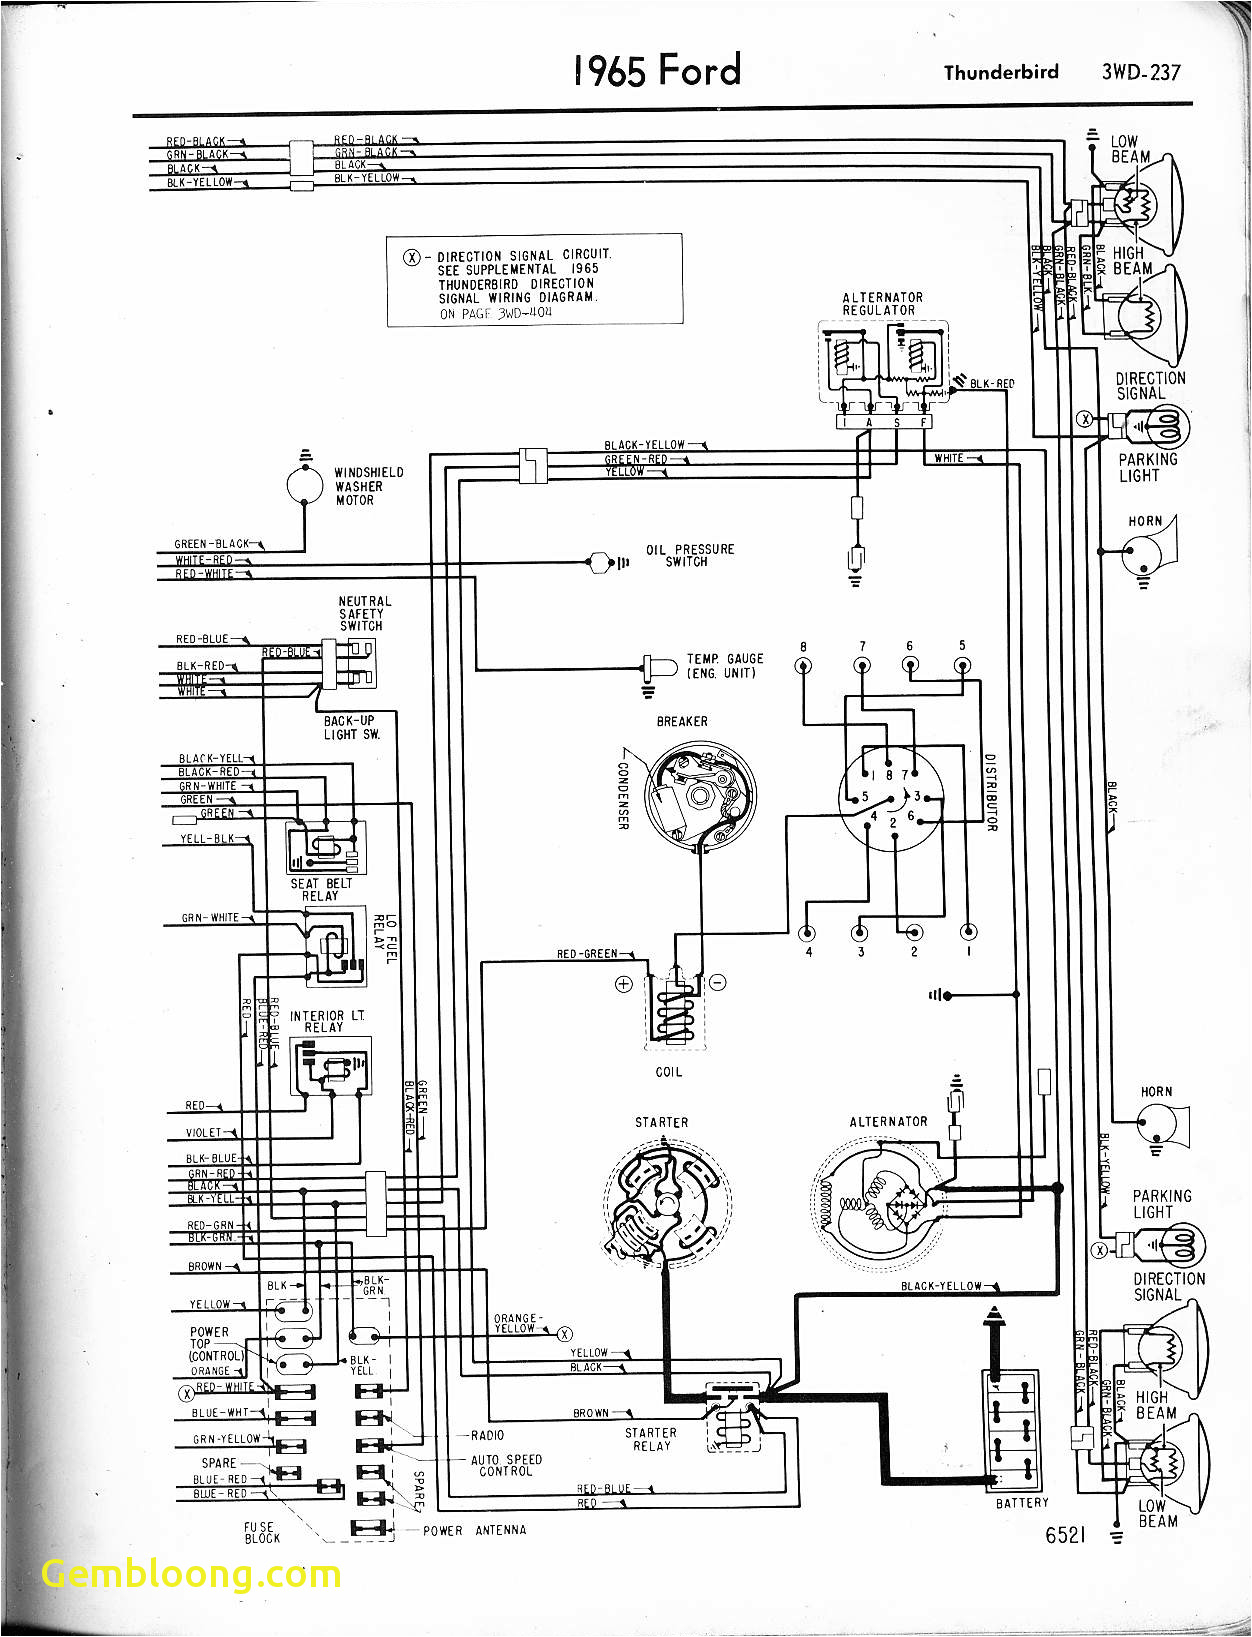 wiring diagram for 1986 ford thunderbird wiring diagrams long1957 ford thunderbird wiring diagram wiring diagram datasource